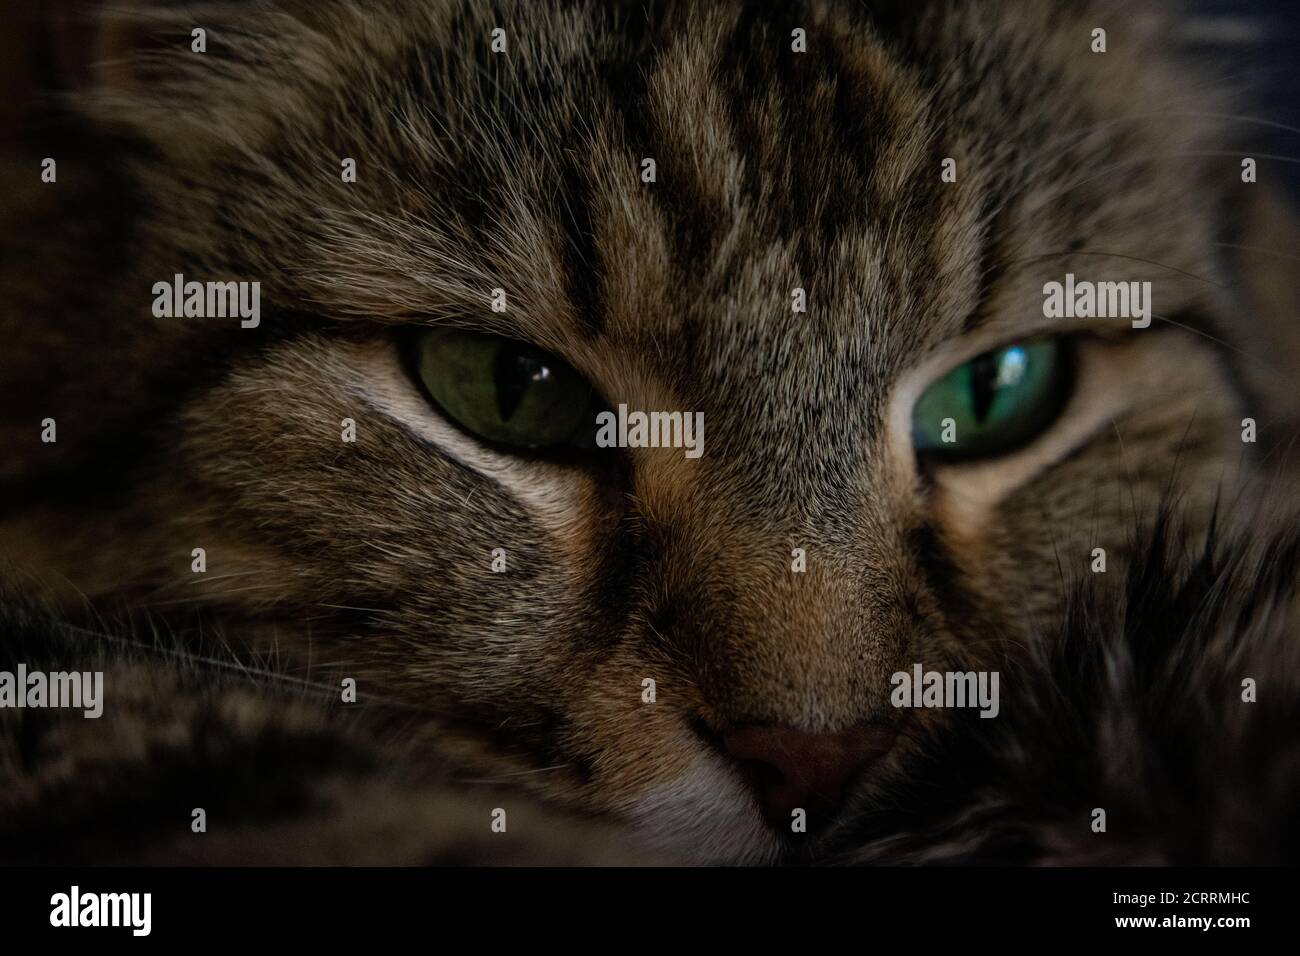 Cat close-ups Stock Photo